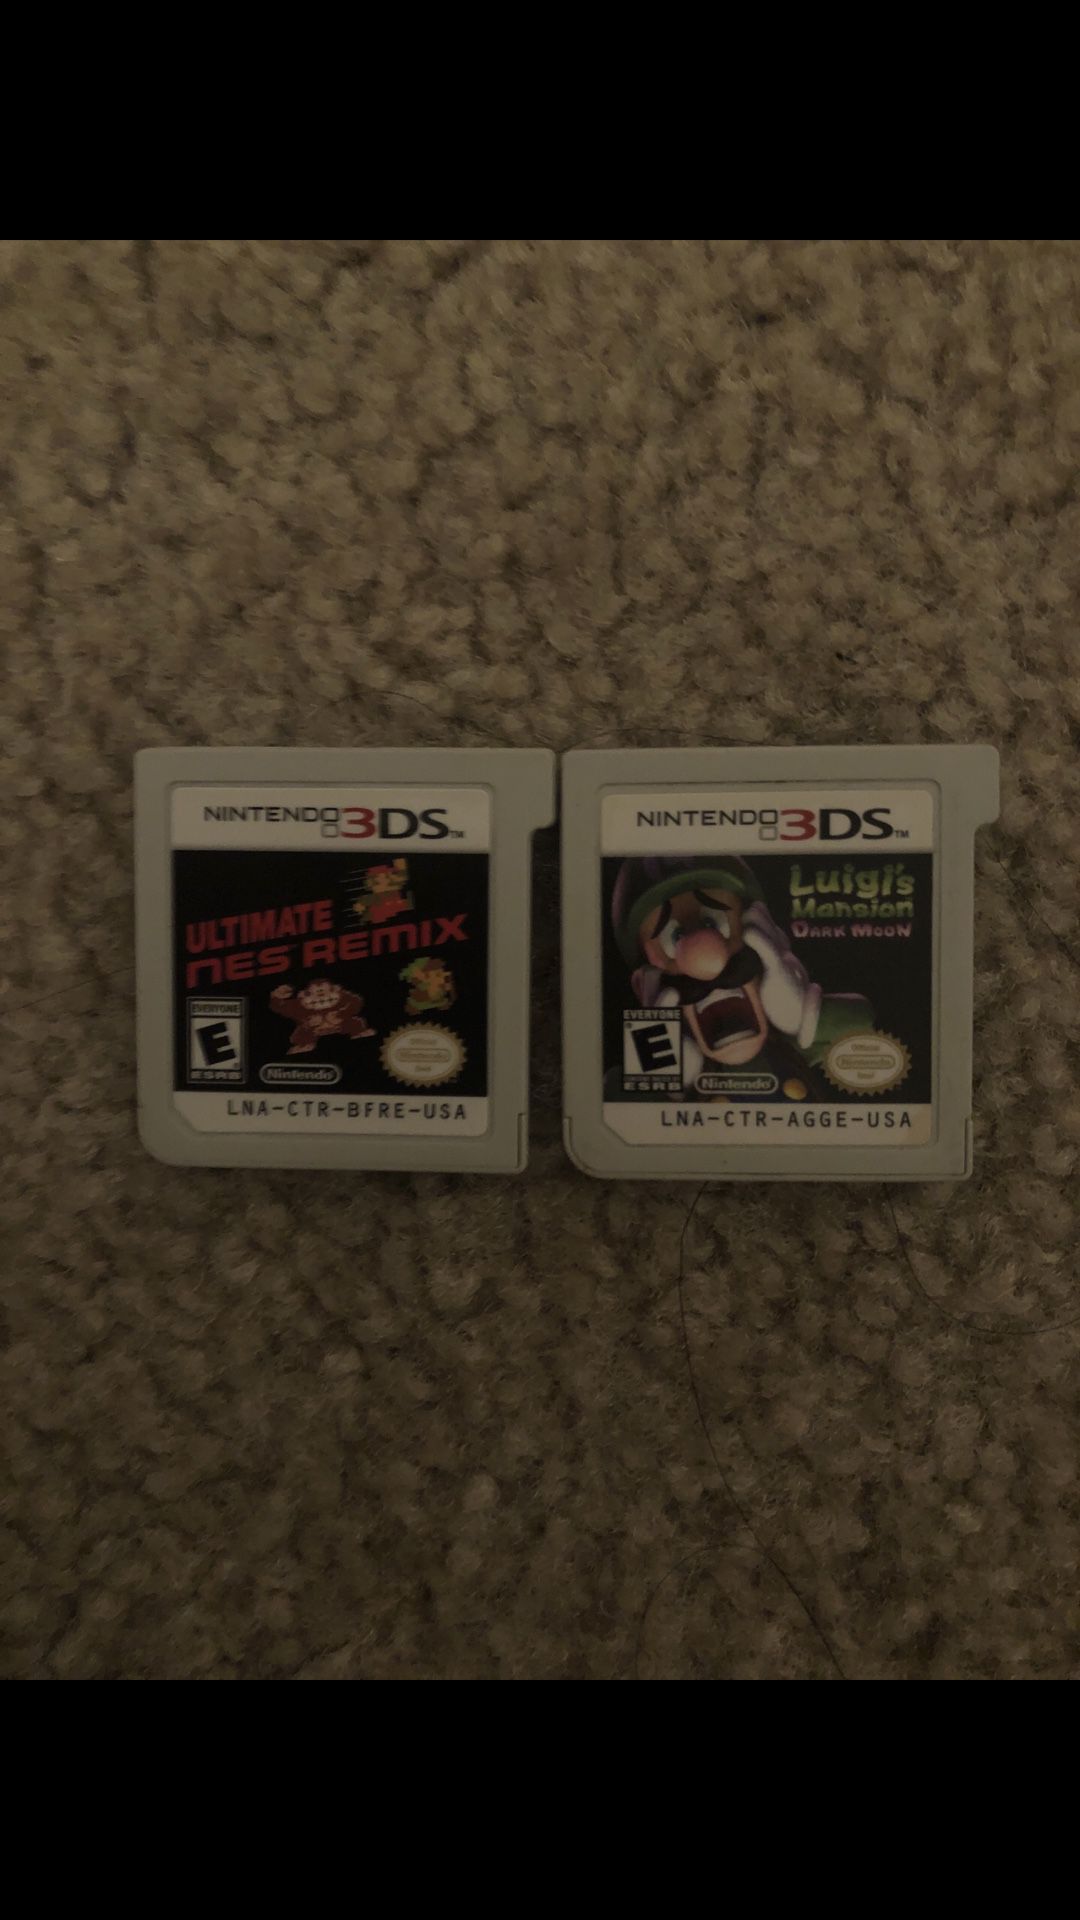 Luigi’s Mansion Dark Moon and Ultimate NES Remix 3ds games/no case